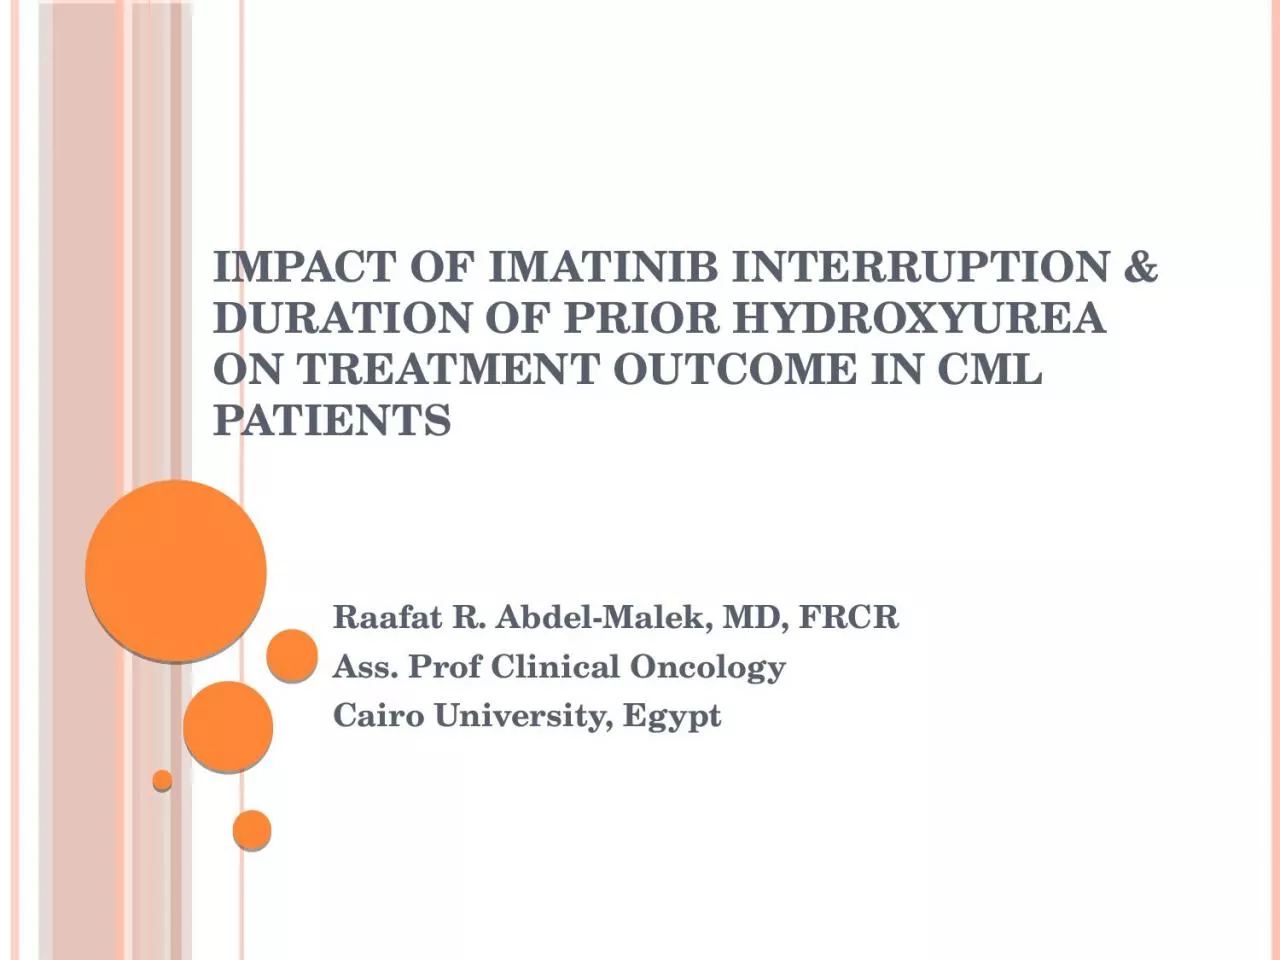 Impact of Imatinib interruption & duration of prior Hydroxyurea on treatment outcome